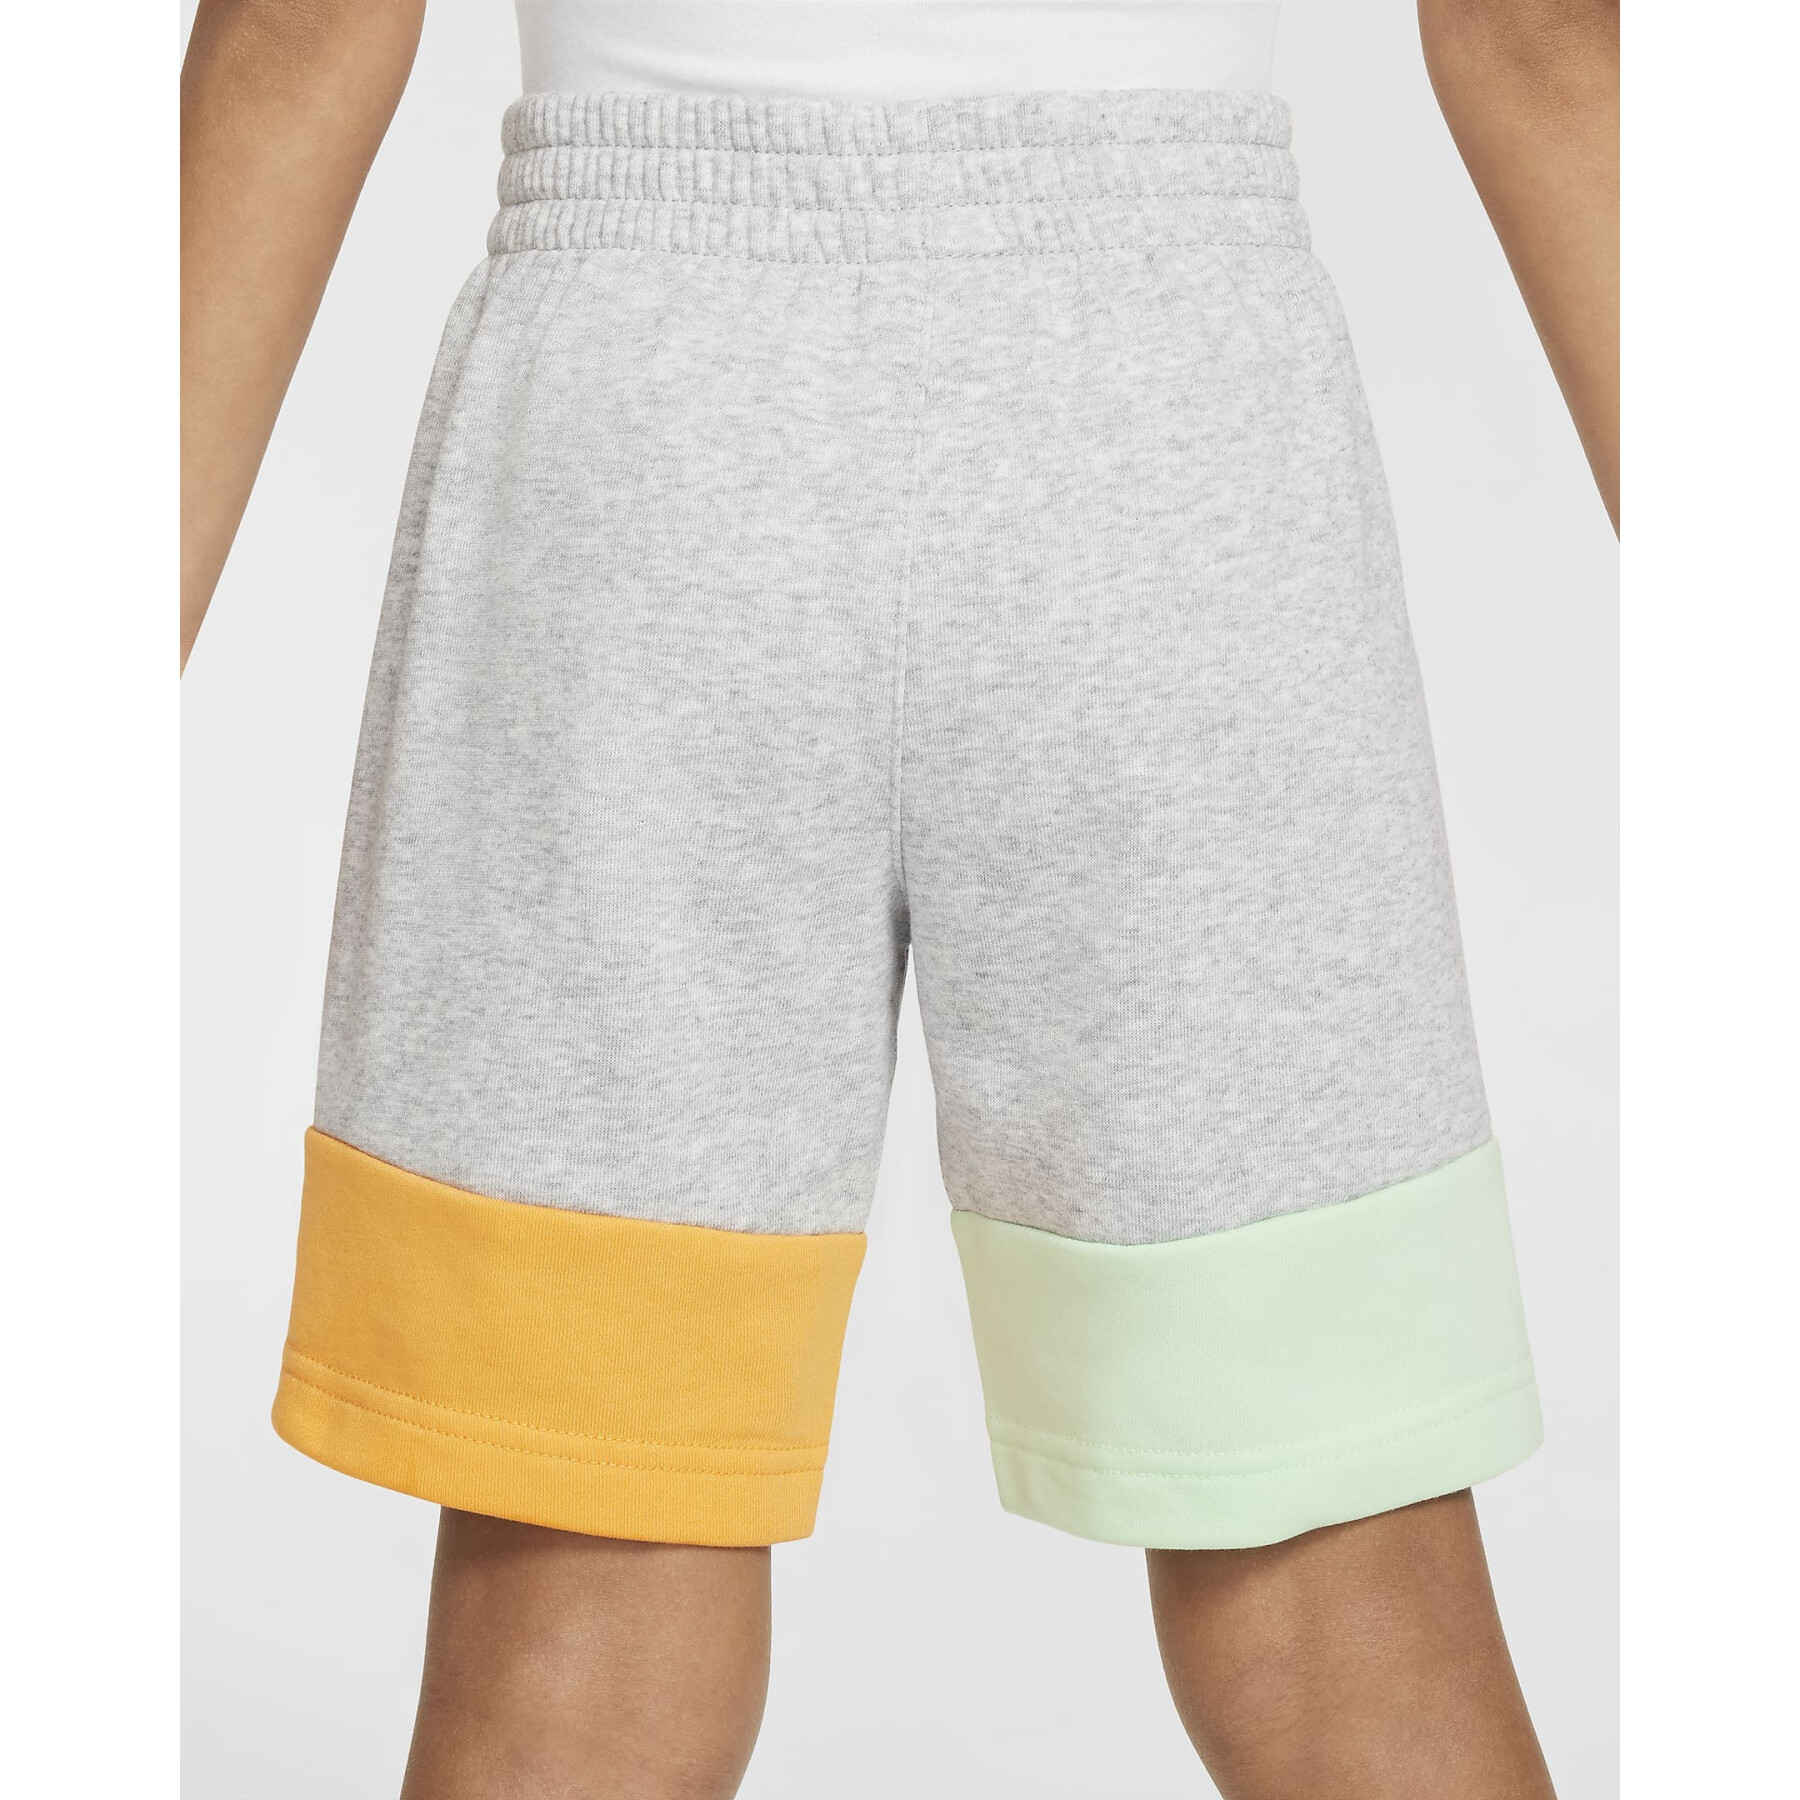 Children's shorts and t-shirt set Nike KSA